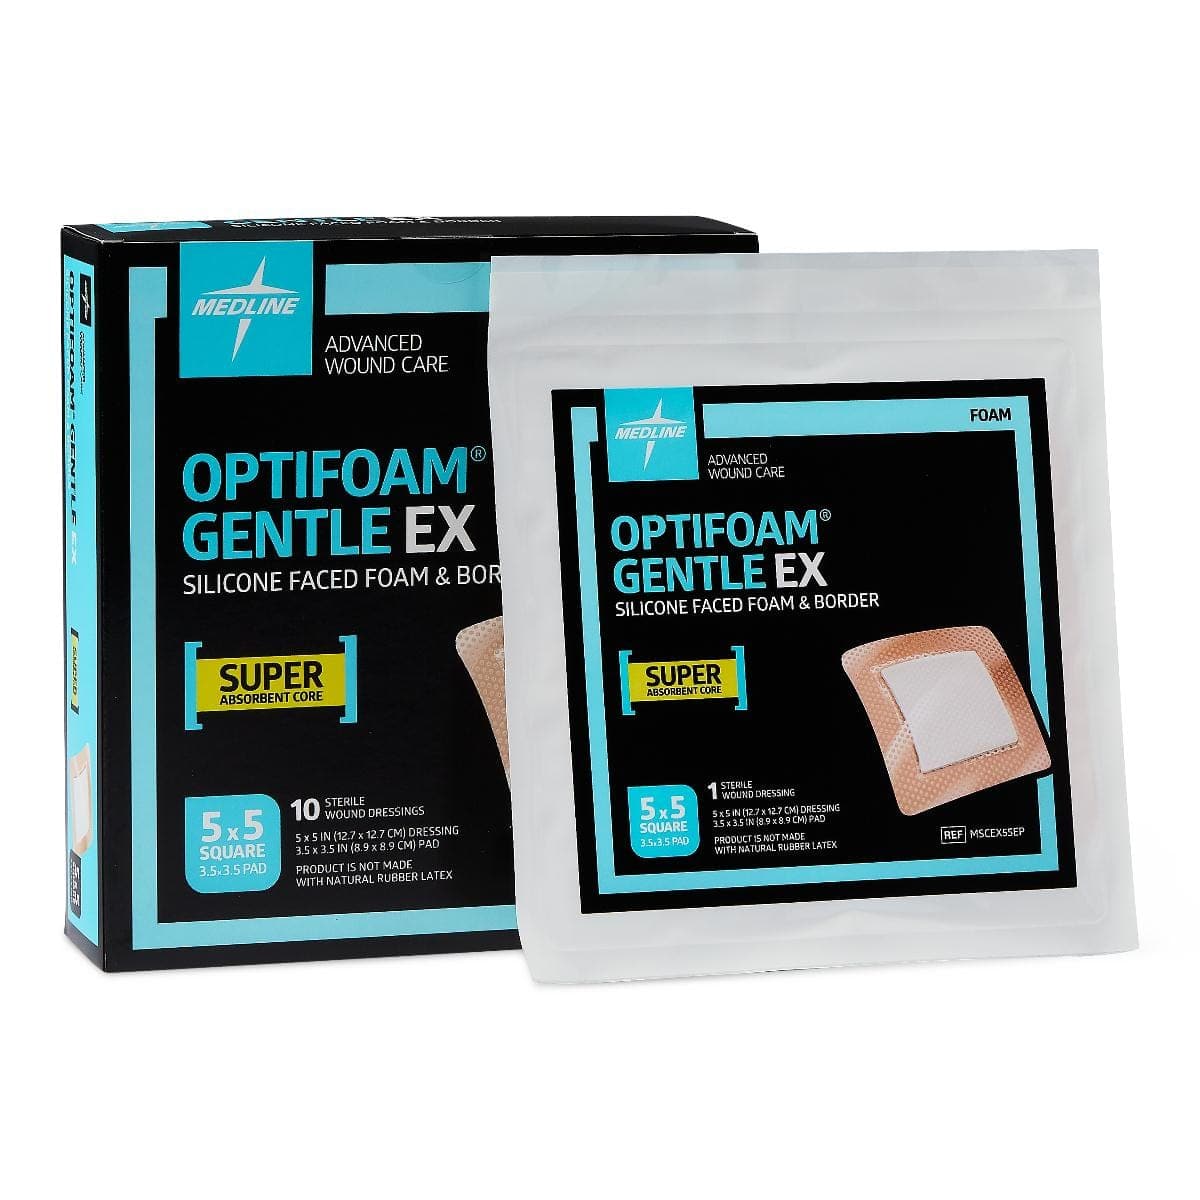 Medline Medline Optifoam Gentle EX Silicone-Faced Foam Dressings MSCEX55EPH